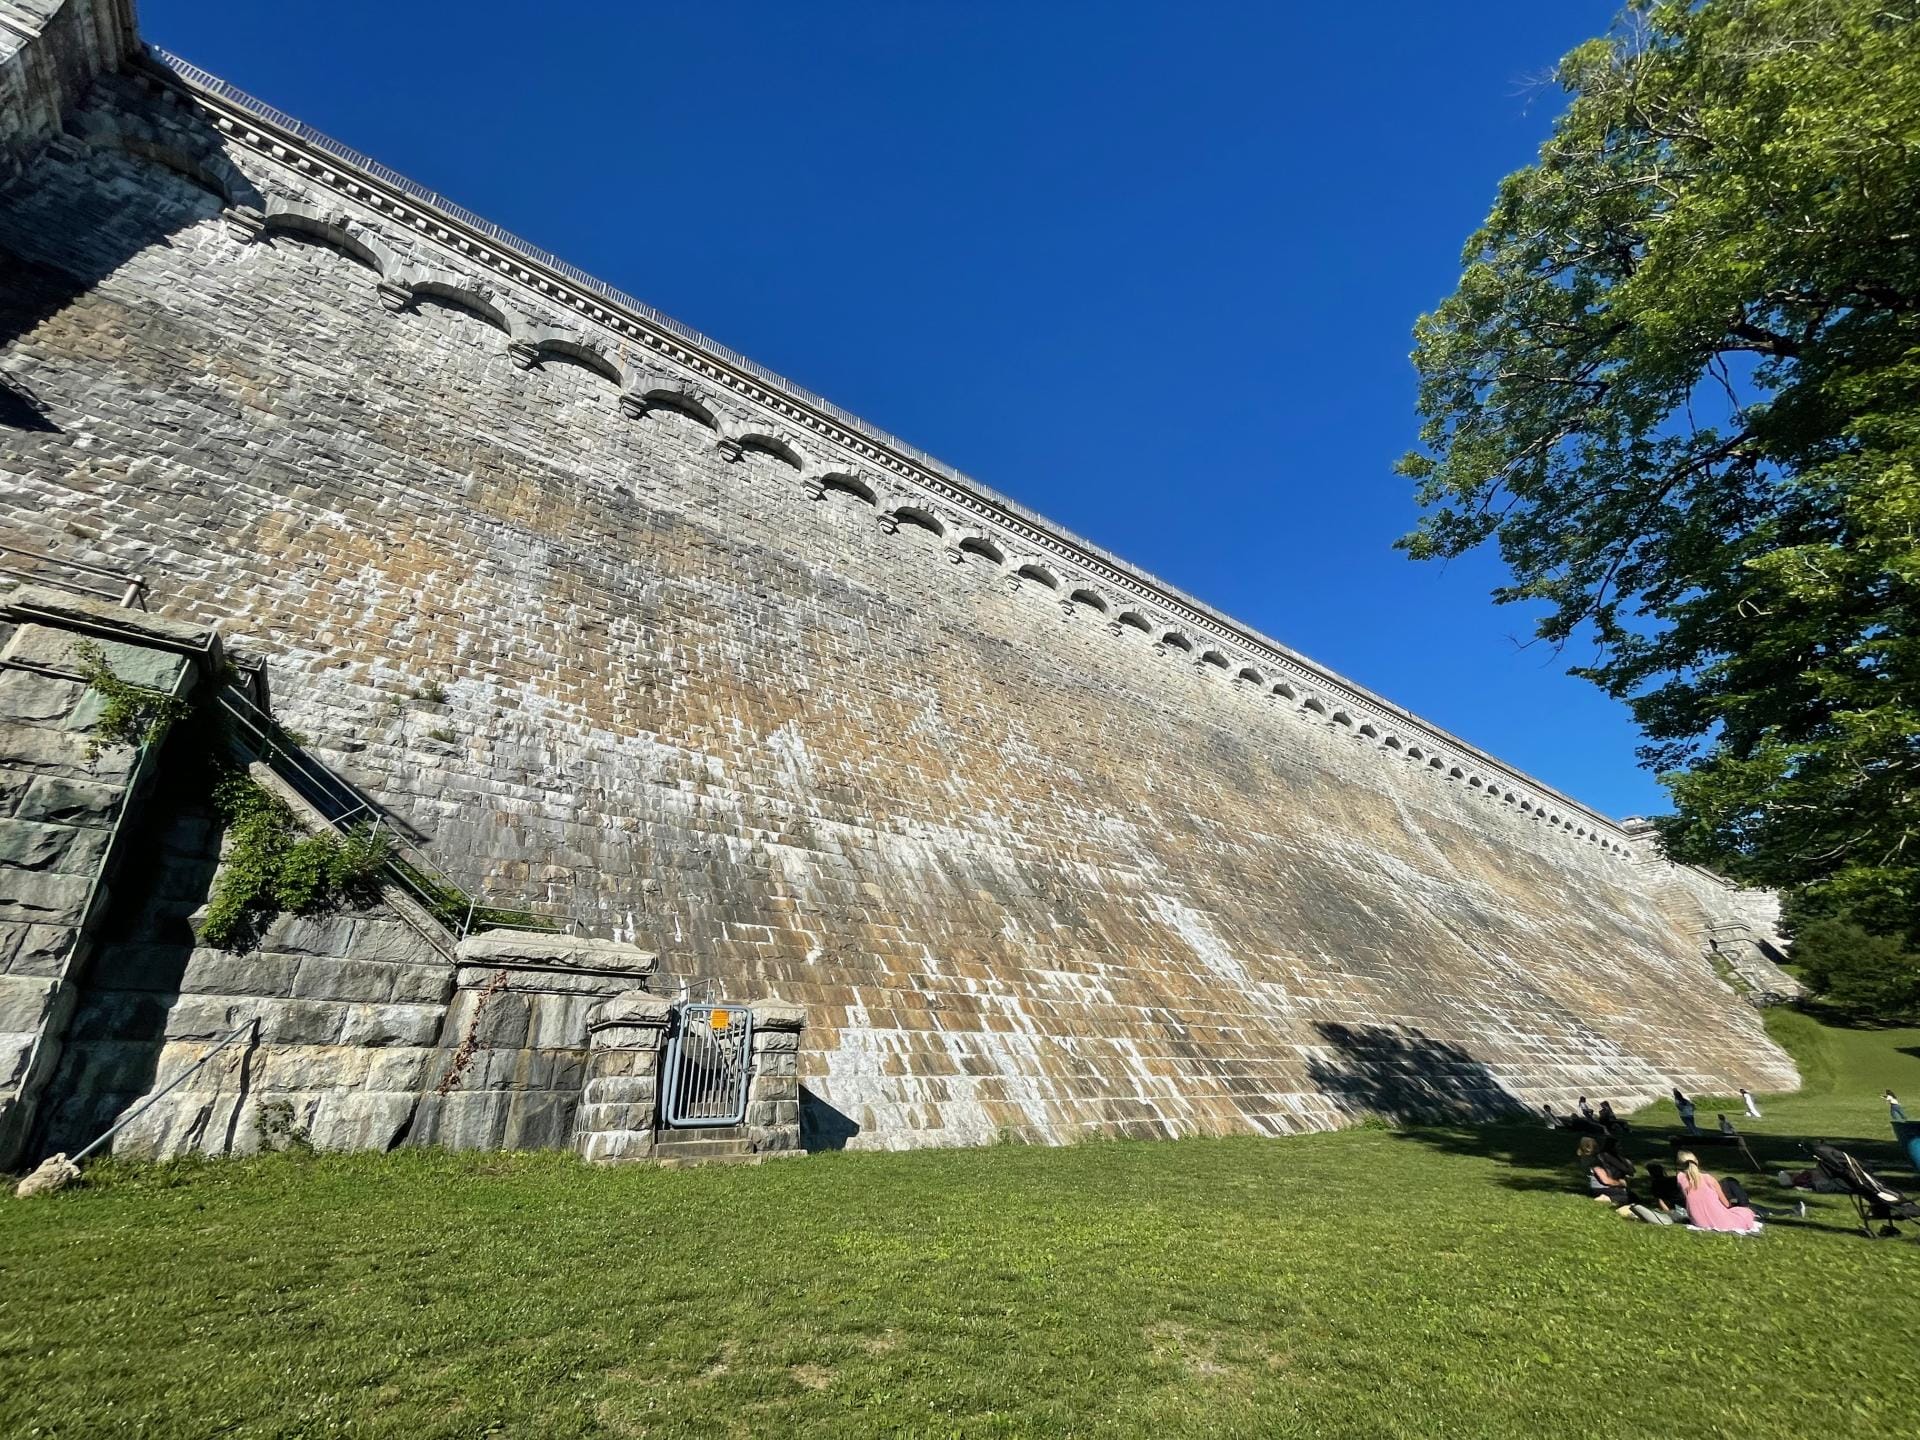 Croton Dam